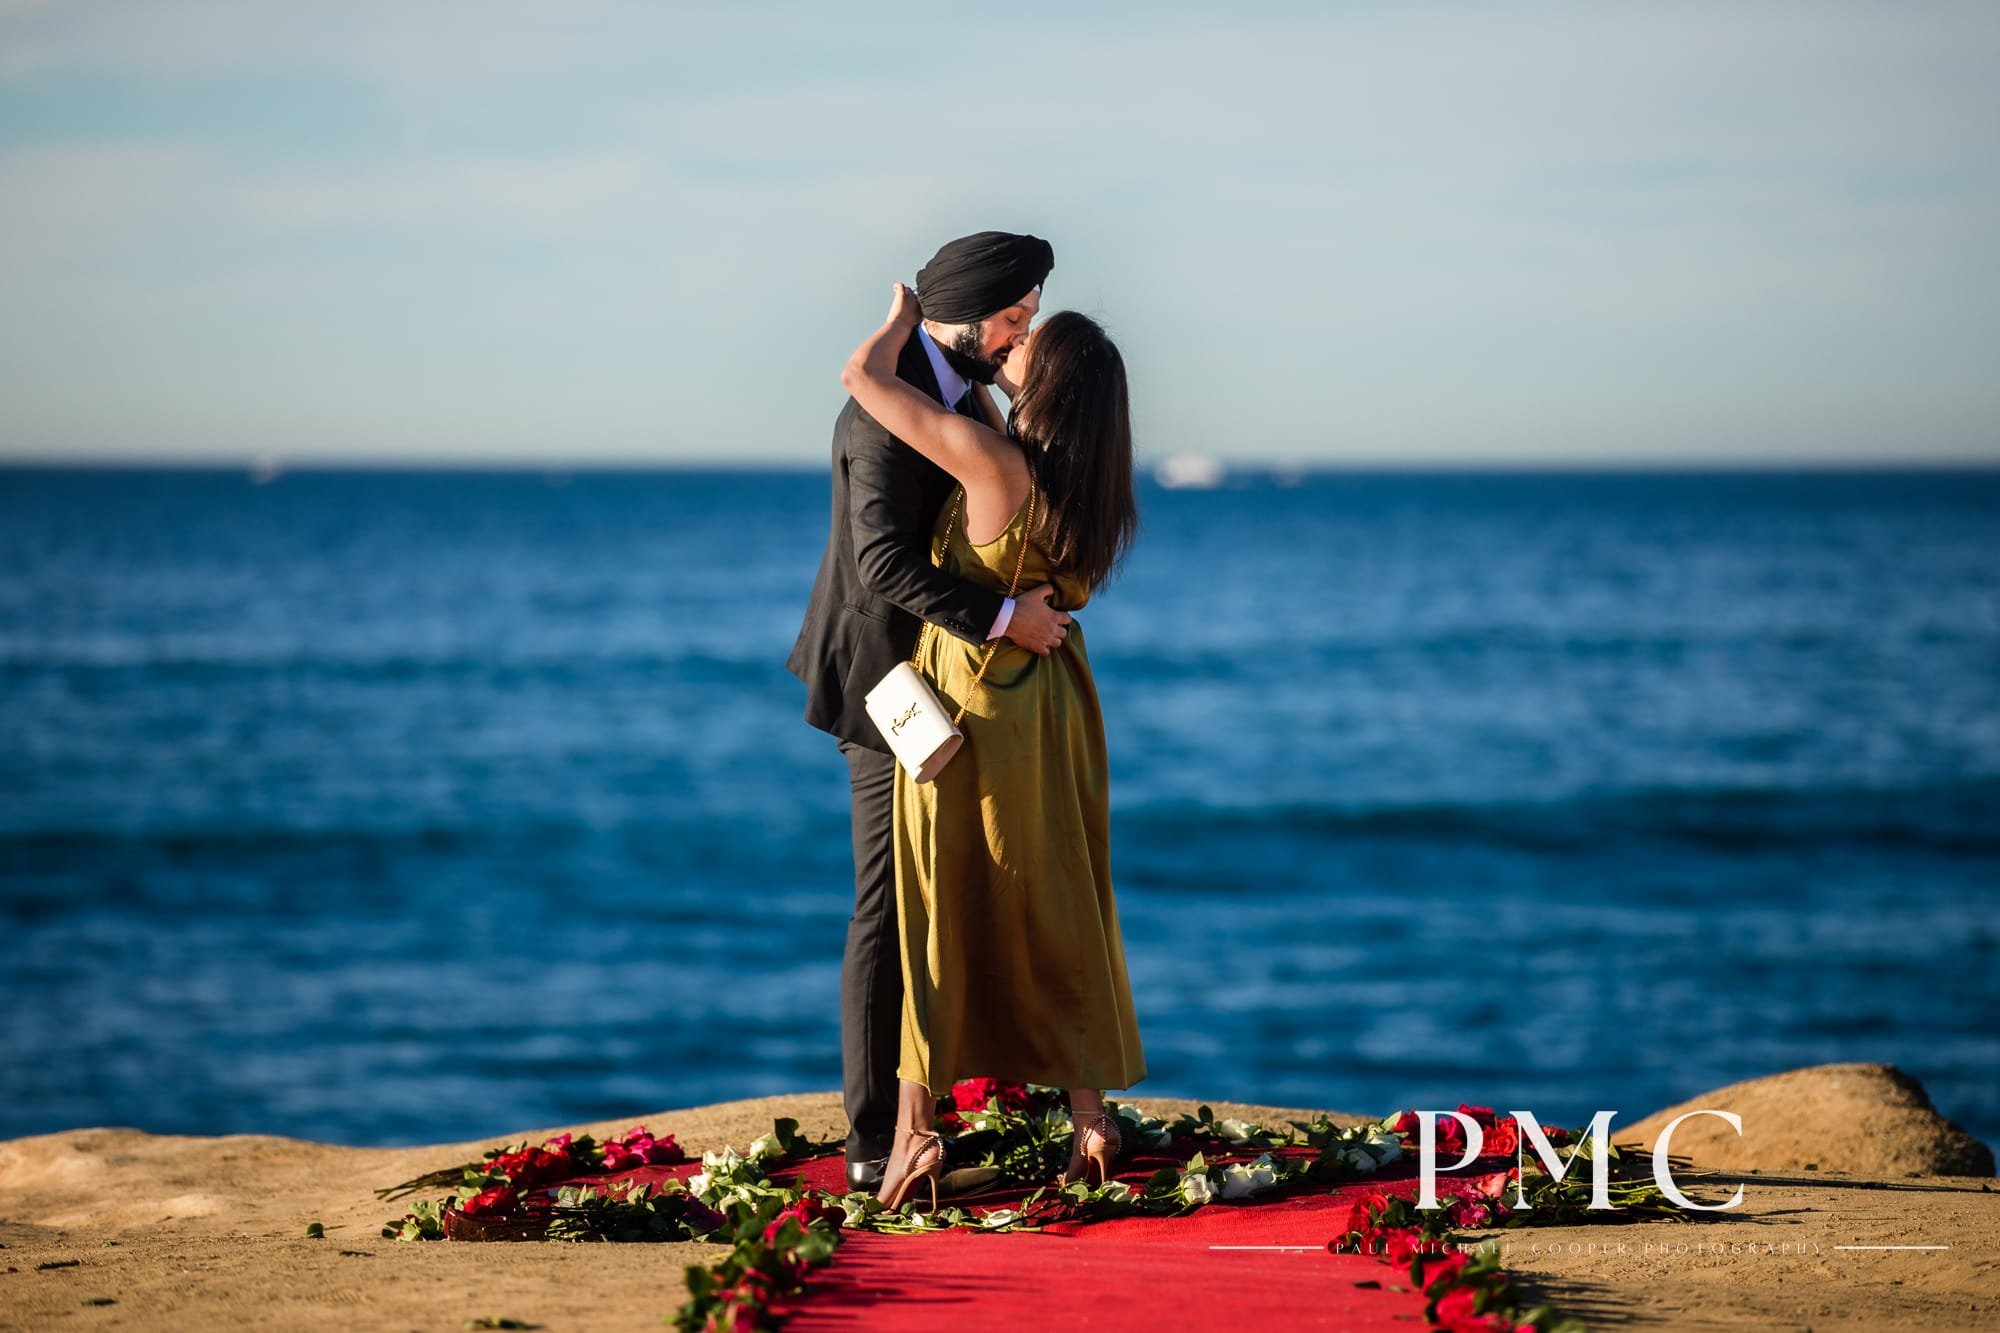 Sunset Cliffs Surprise Proposal - Balboa Park Engagement Photos - Best San Diego Wedding Photographer-13.jpg